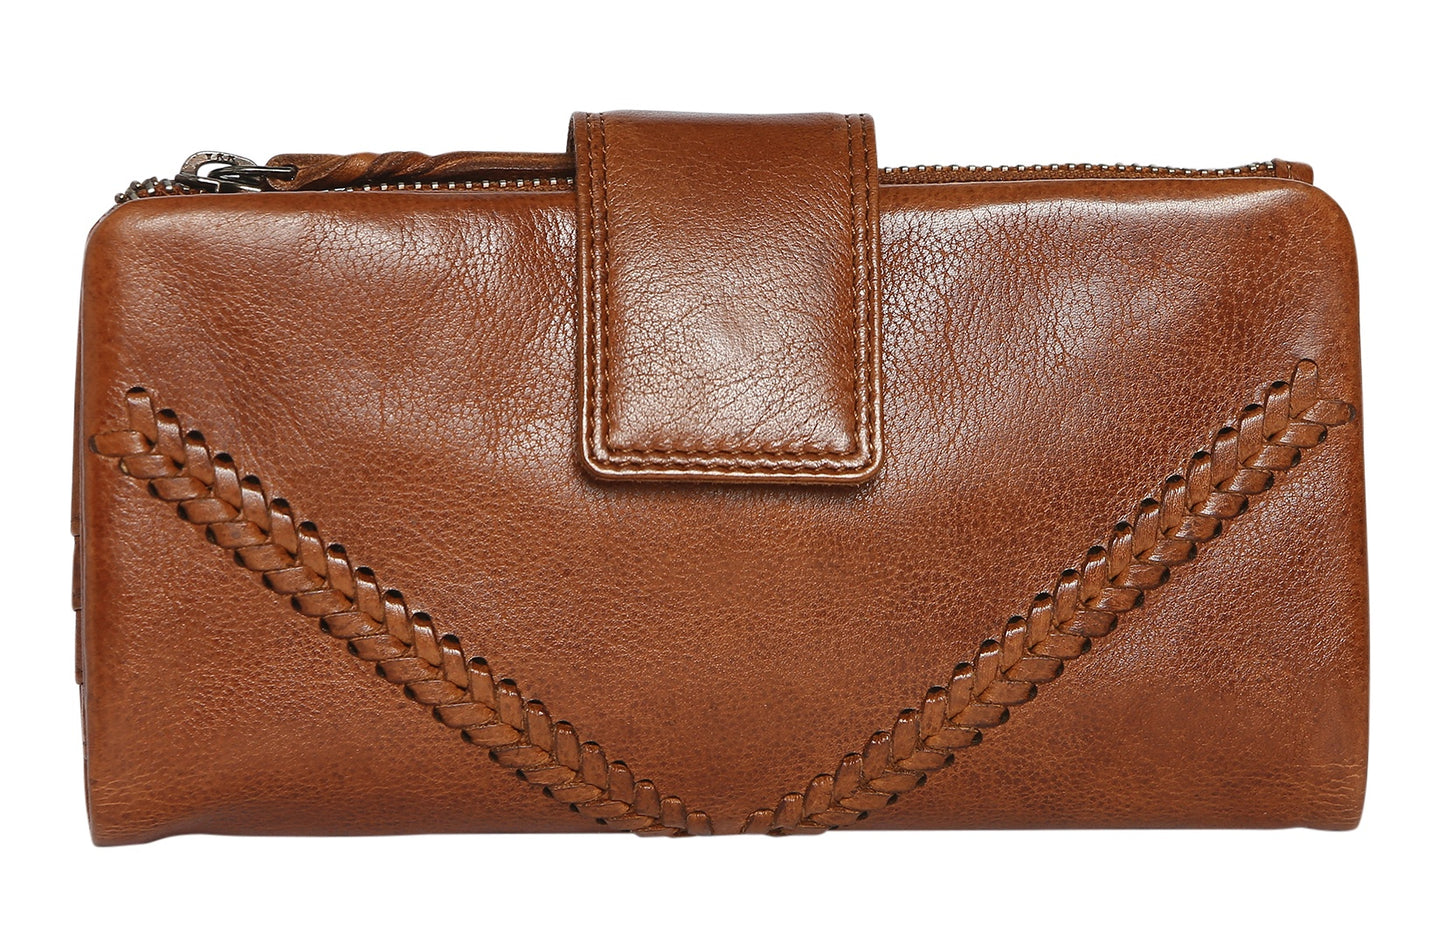 Modapelle - Soft Cow Leather Ladies Multi Comp Wallet in Tan | Moda7703